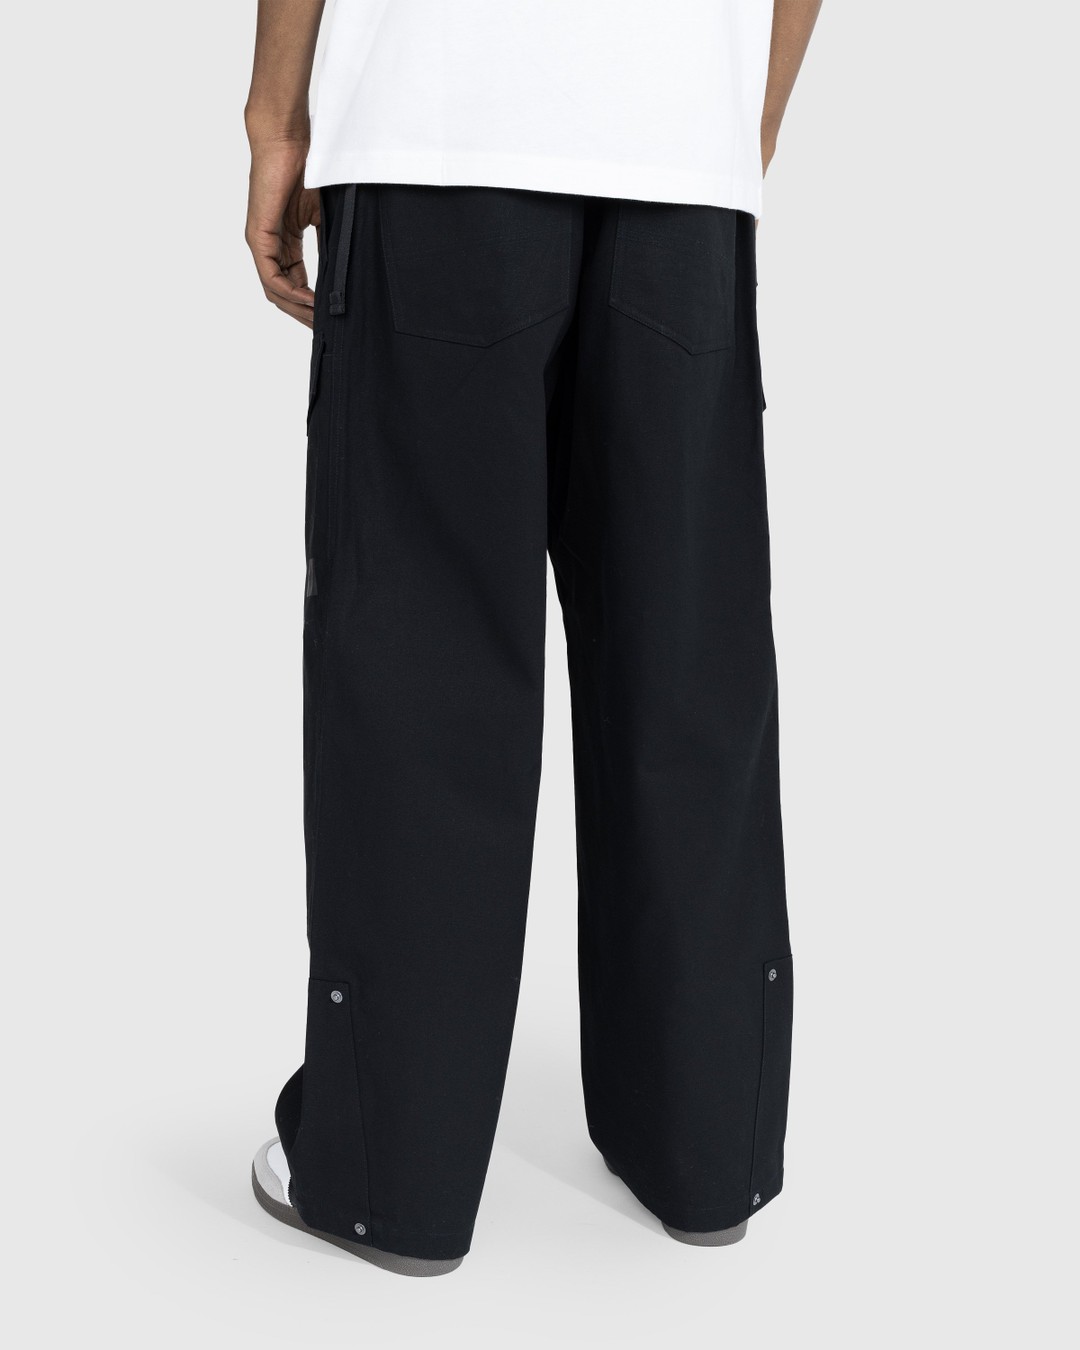 Y-3 – GFX Workwear Pants Black - Pants - Black - Image 3